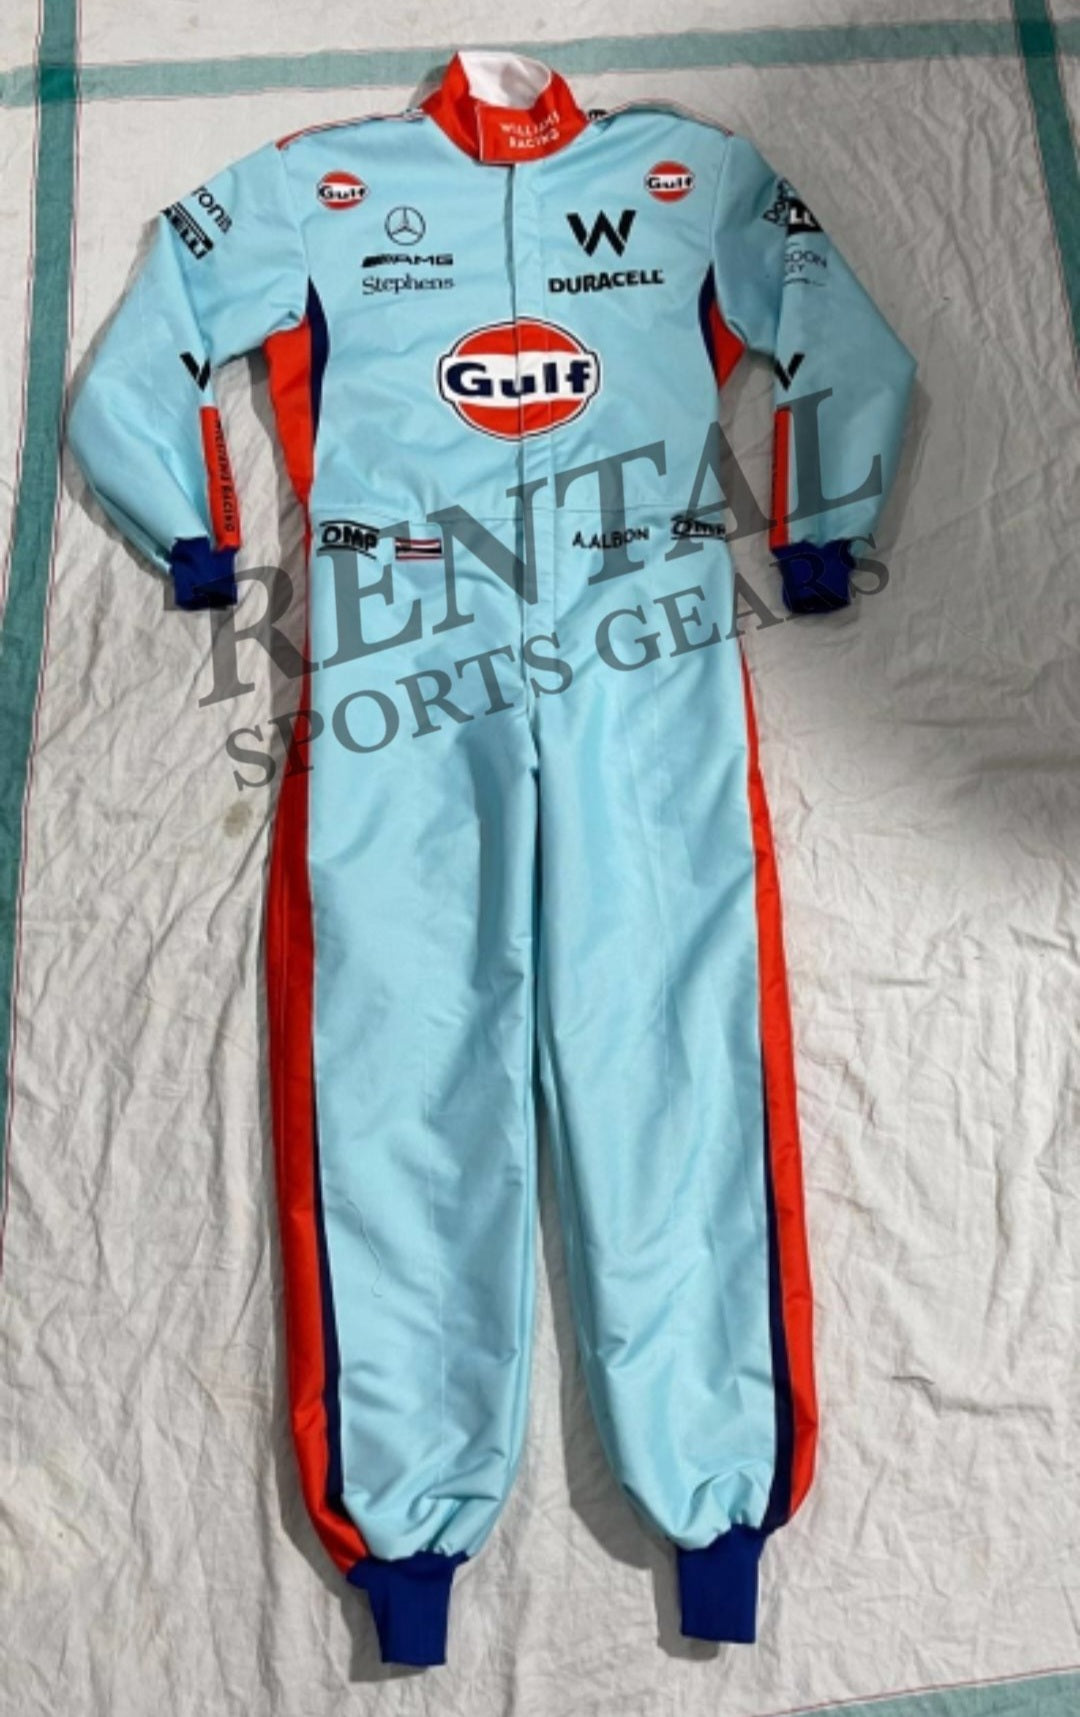 2023 Logan Sargeant Gulf & williams Race Suit Singapore GP